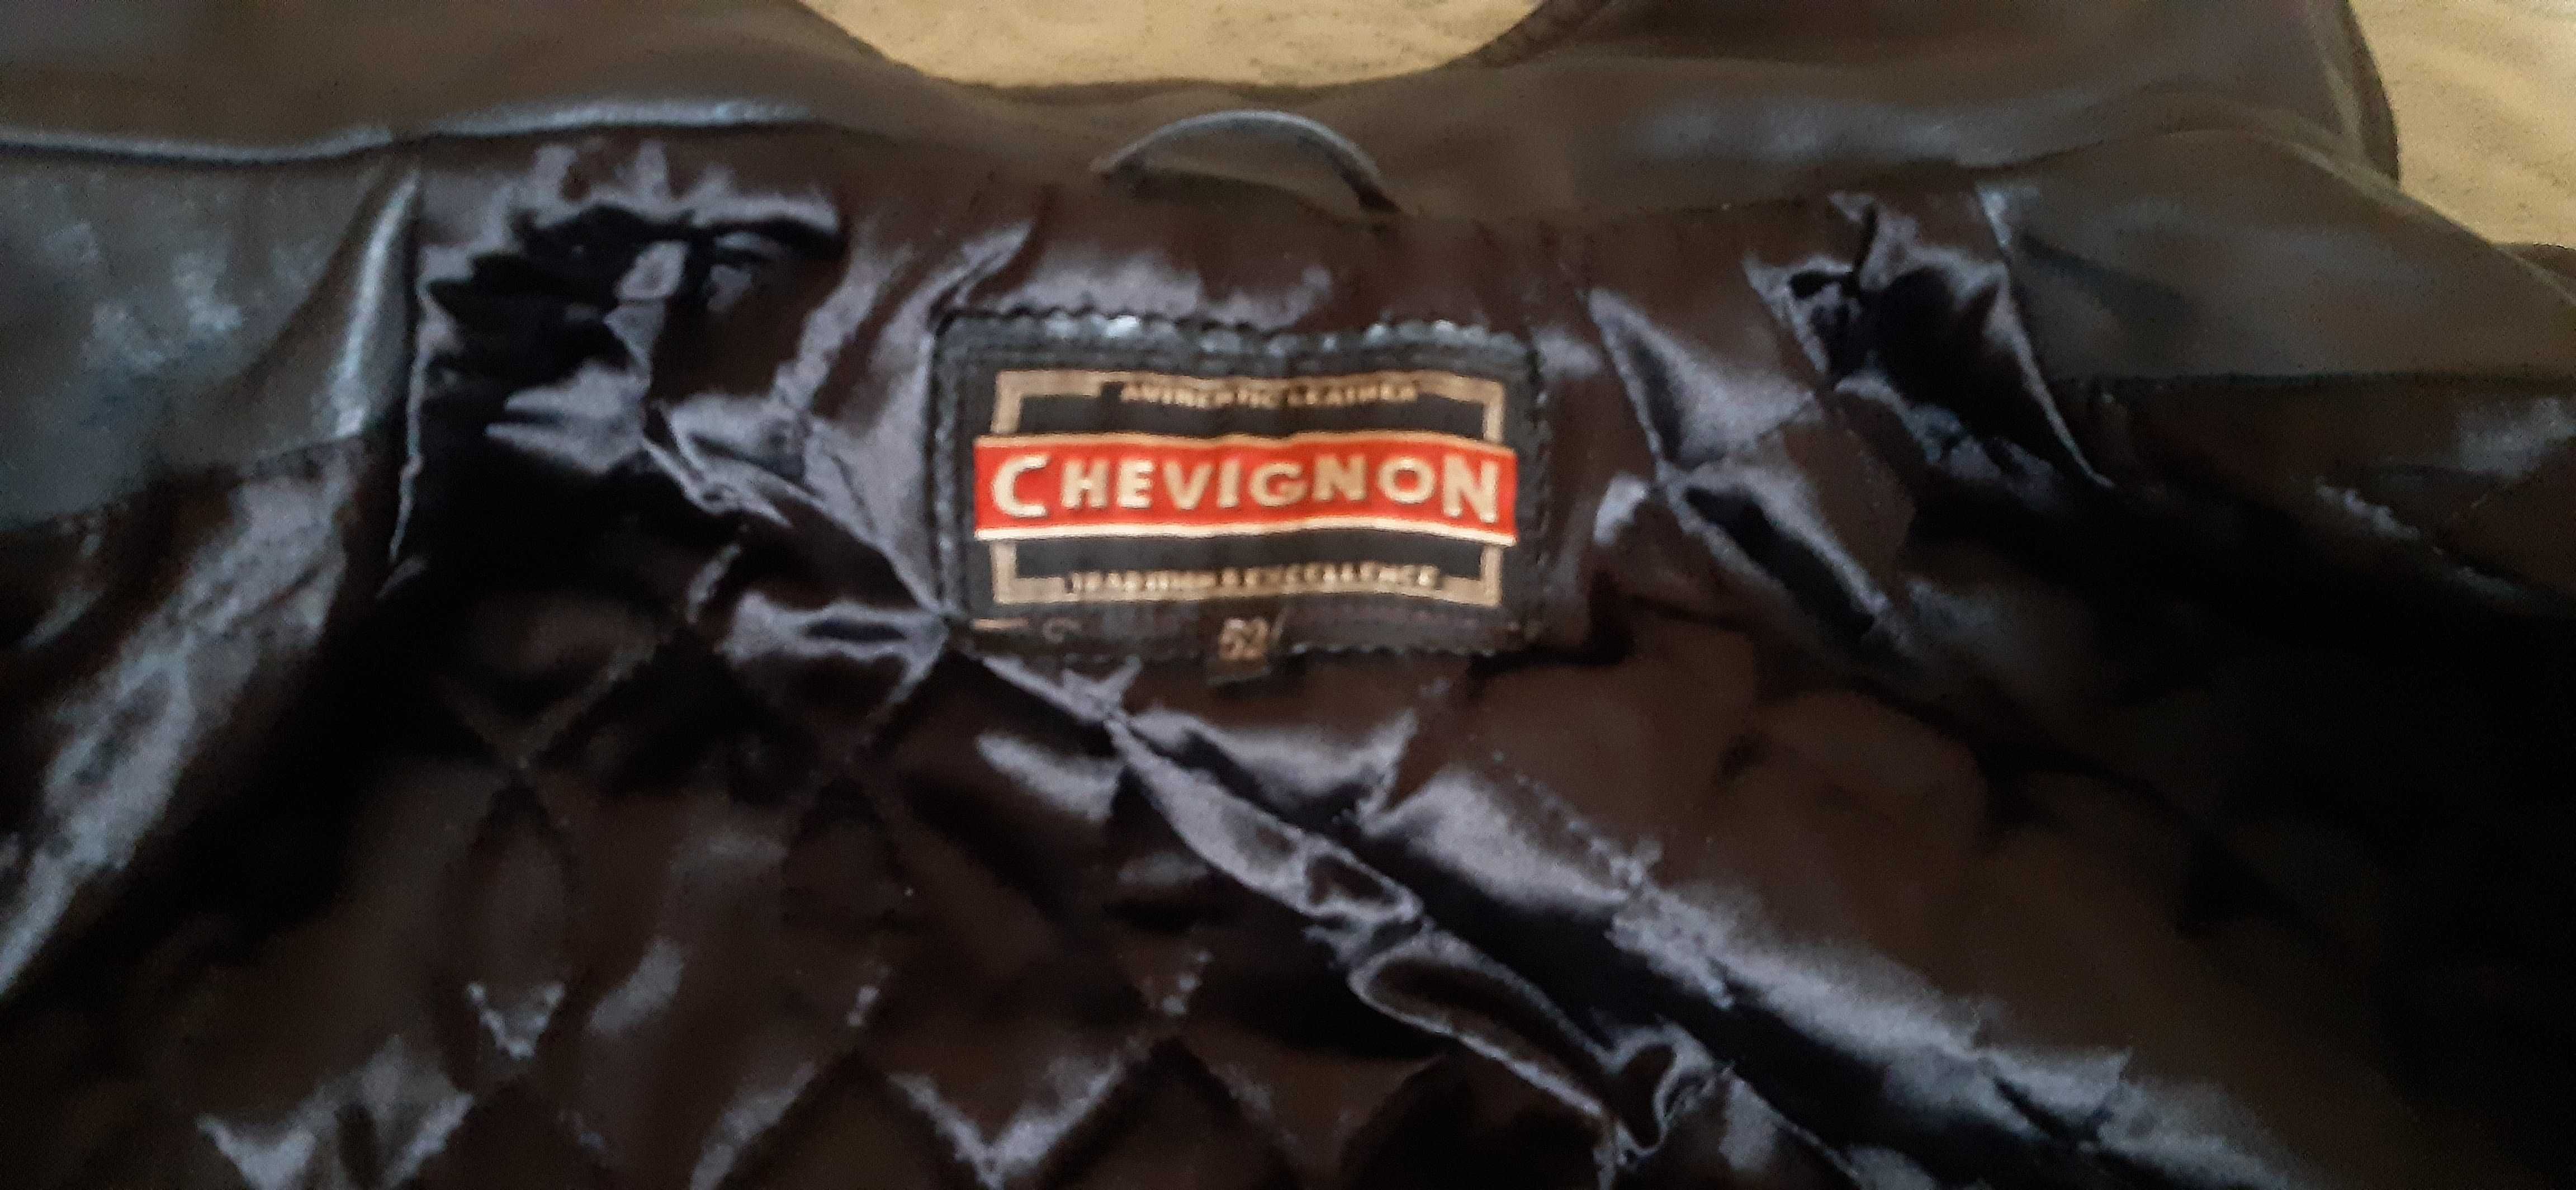 мото куртка кожаная SHEVIGNON,фирменная!